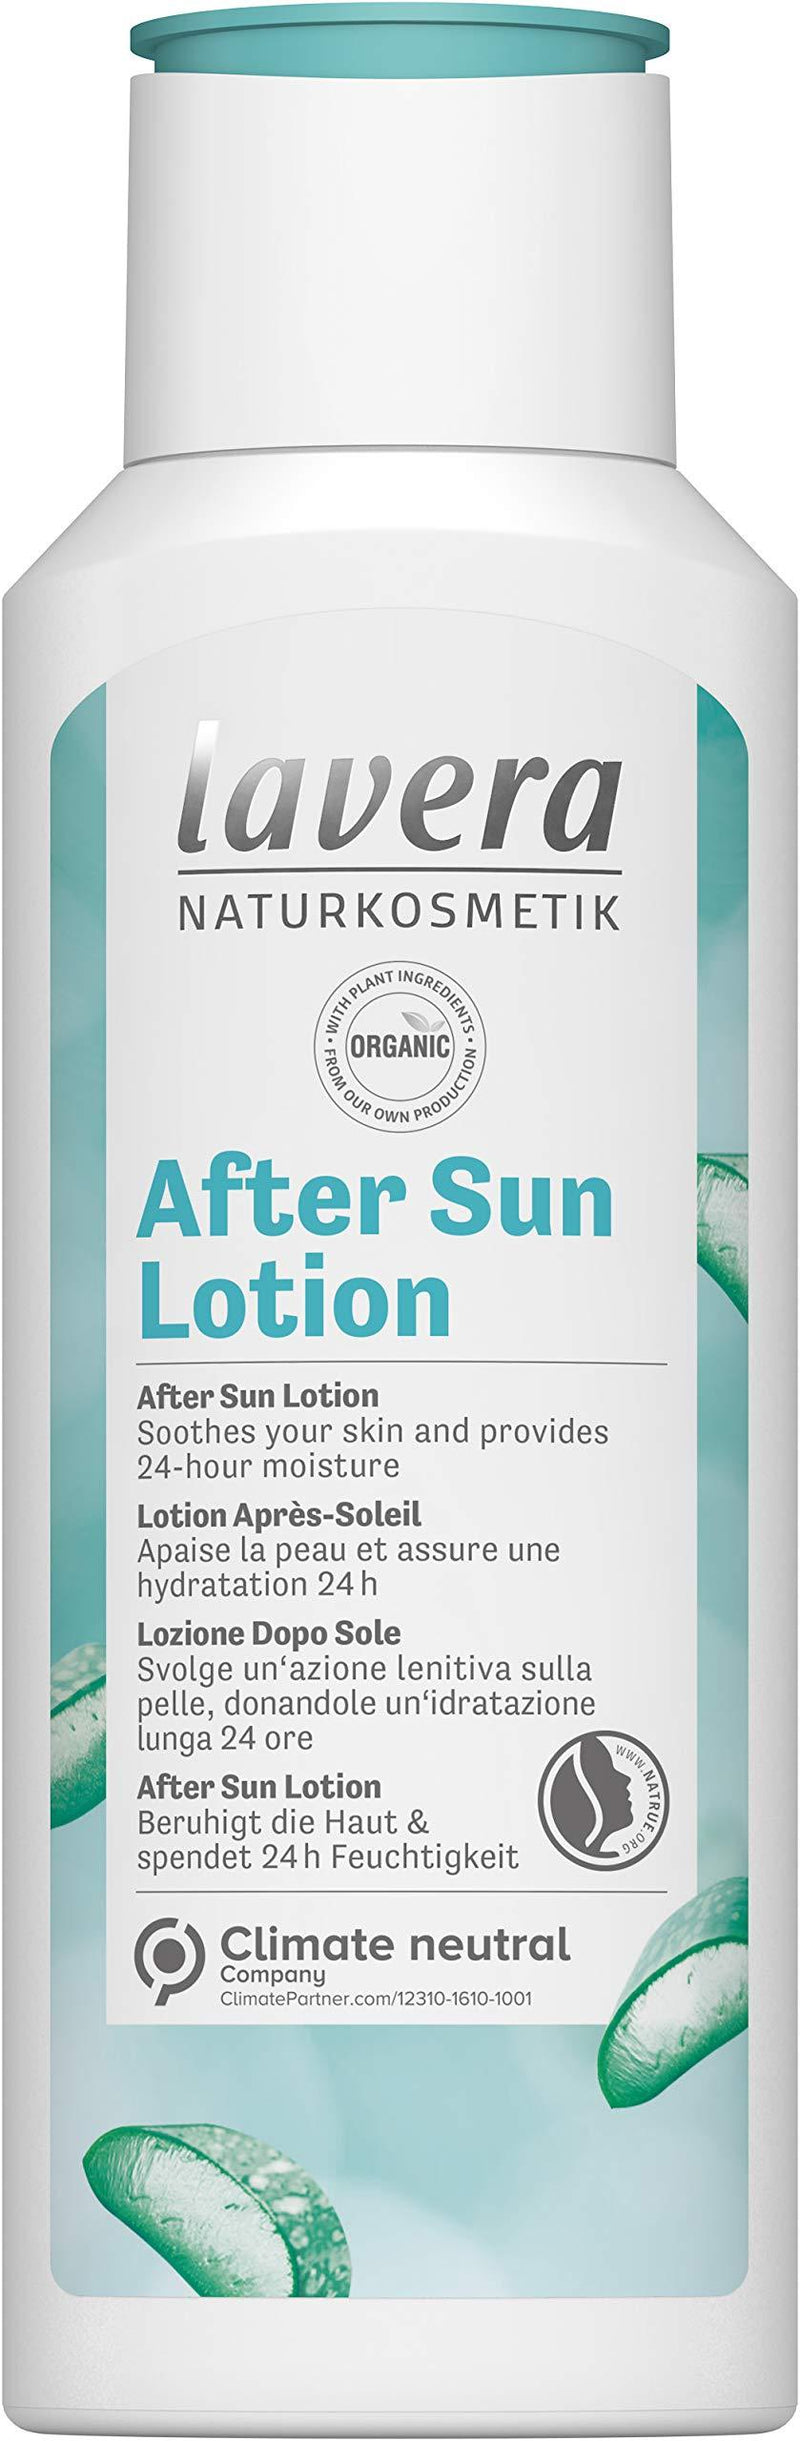 lavera After Sun Lotion • Sun Care • Natural Cosmetics • vegan • certified • 200ml - NewNest Australia